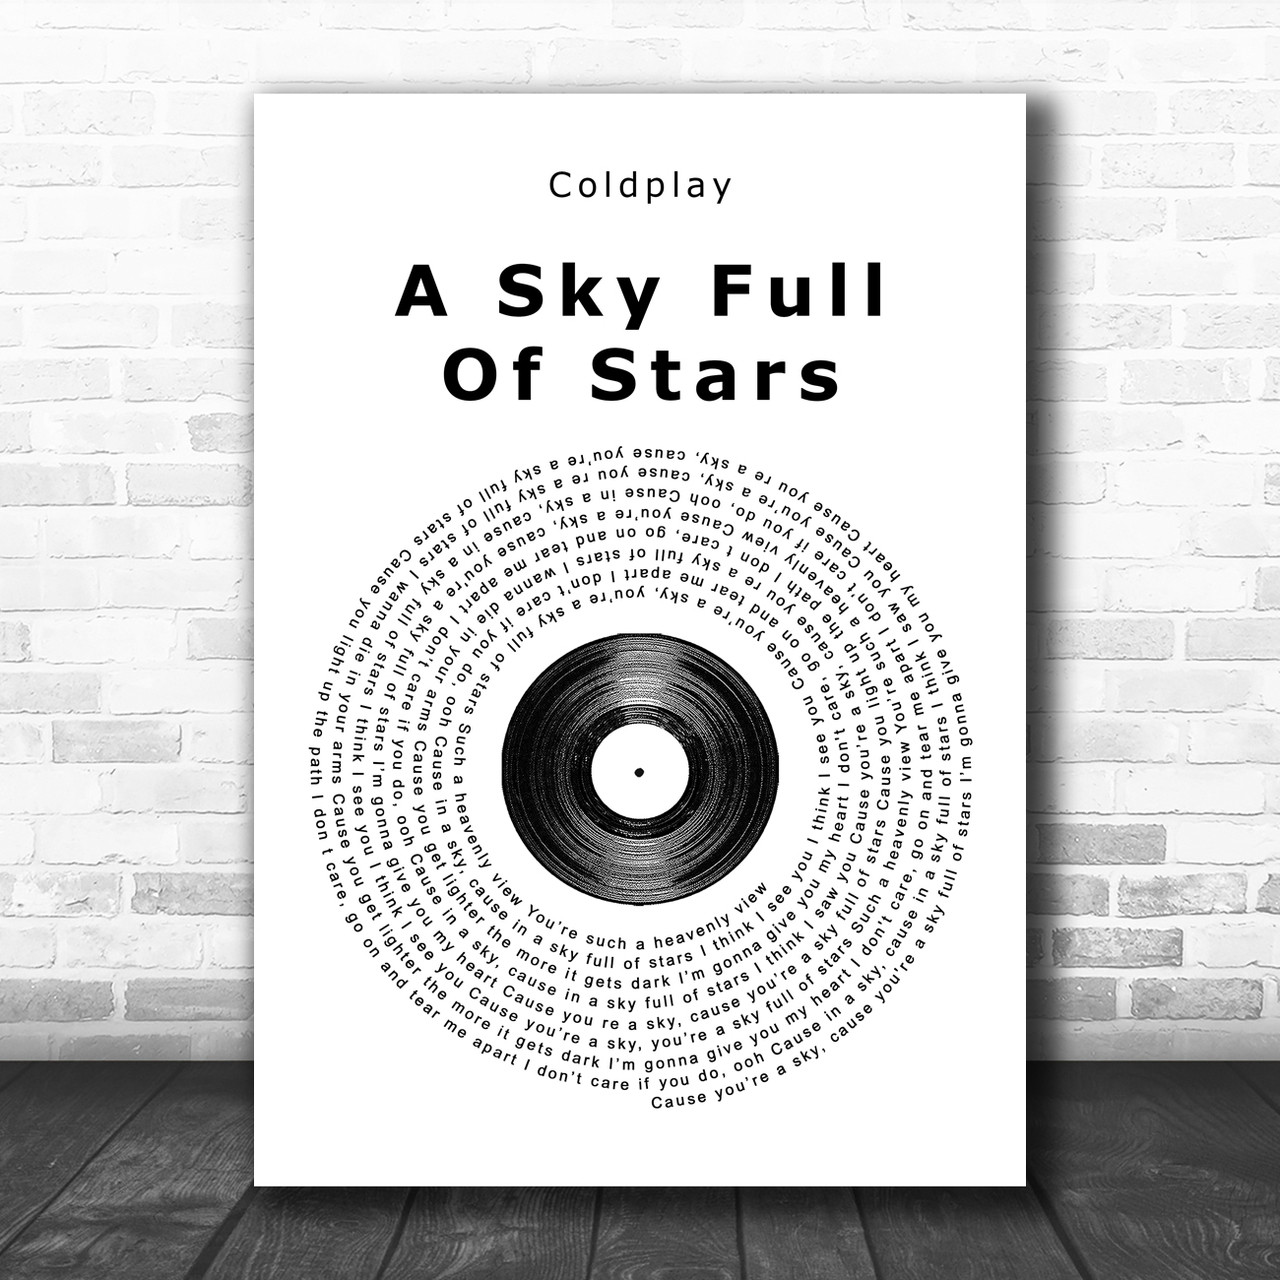 coldplay a sky full of stars lyrics